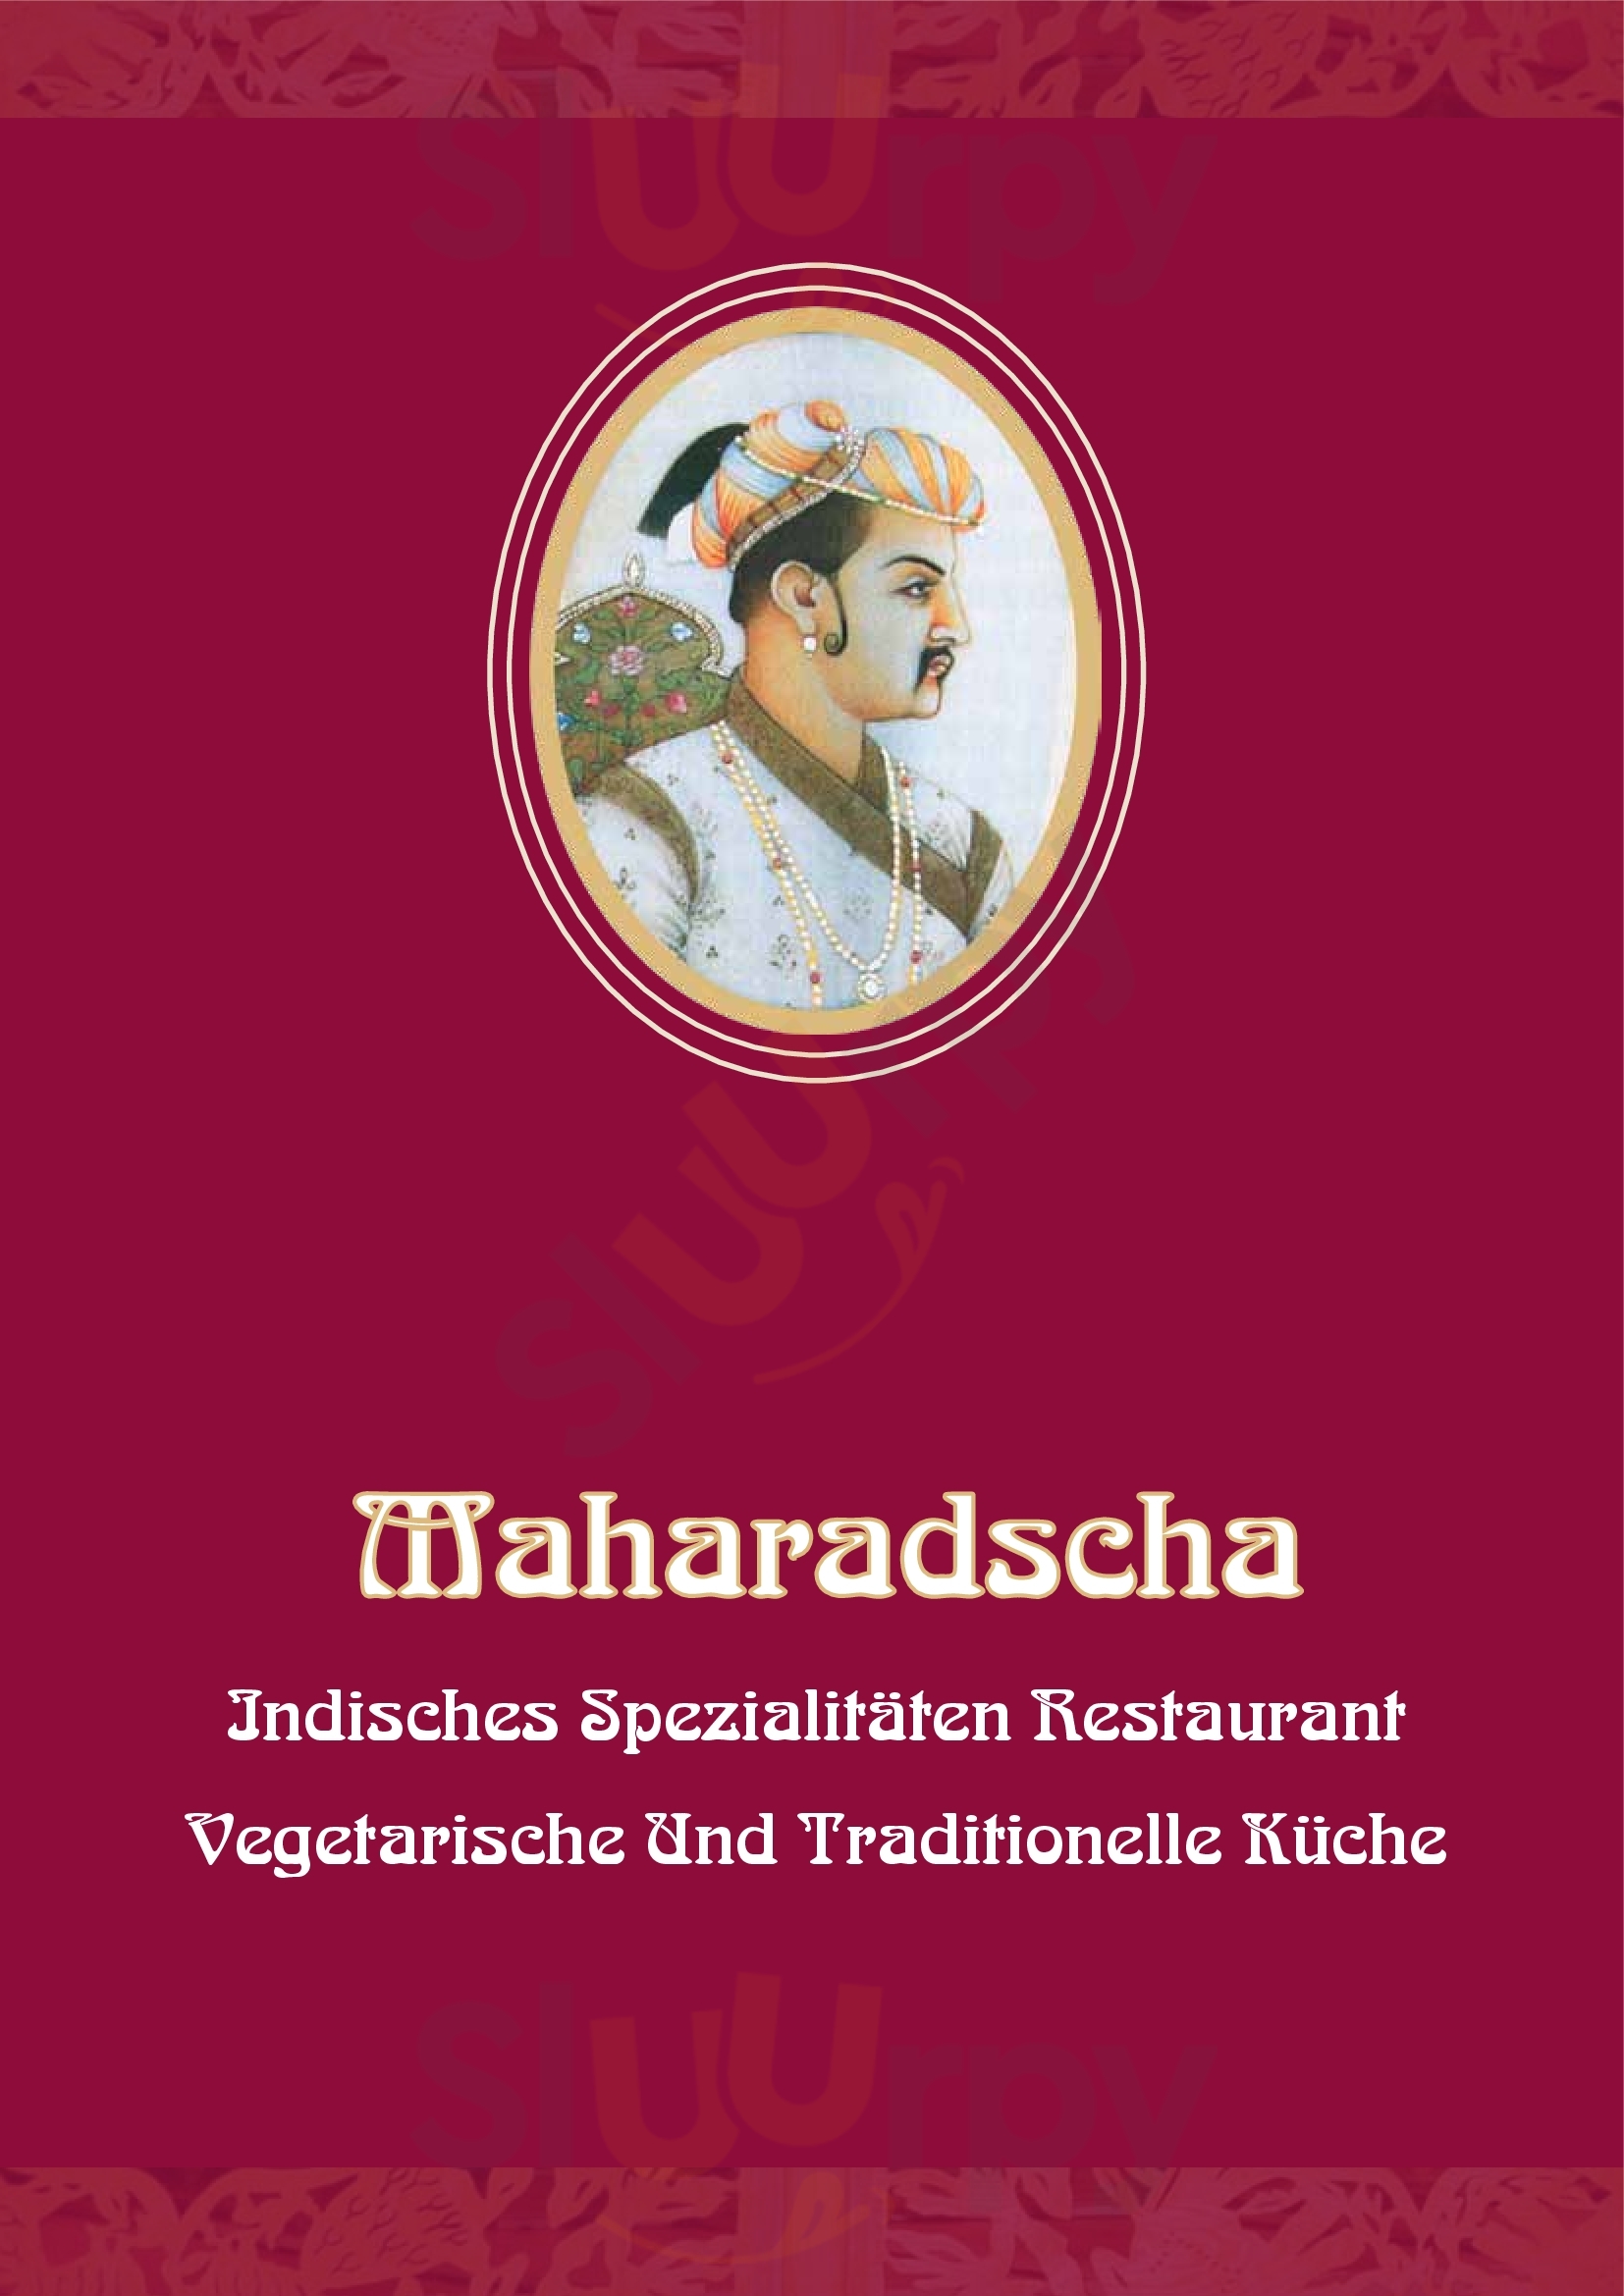 Maharadscha Indisches Restaurant Rosenheim Menu - 1